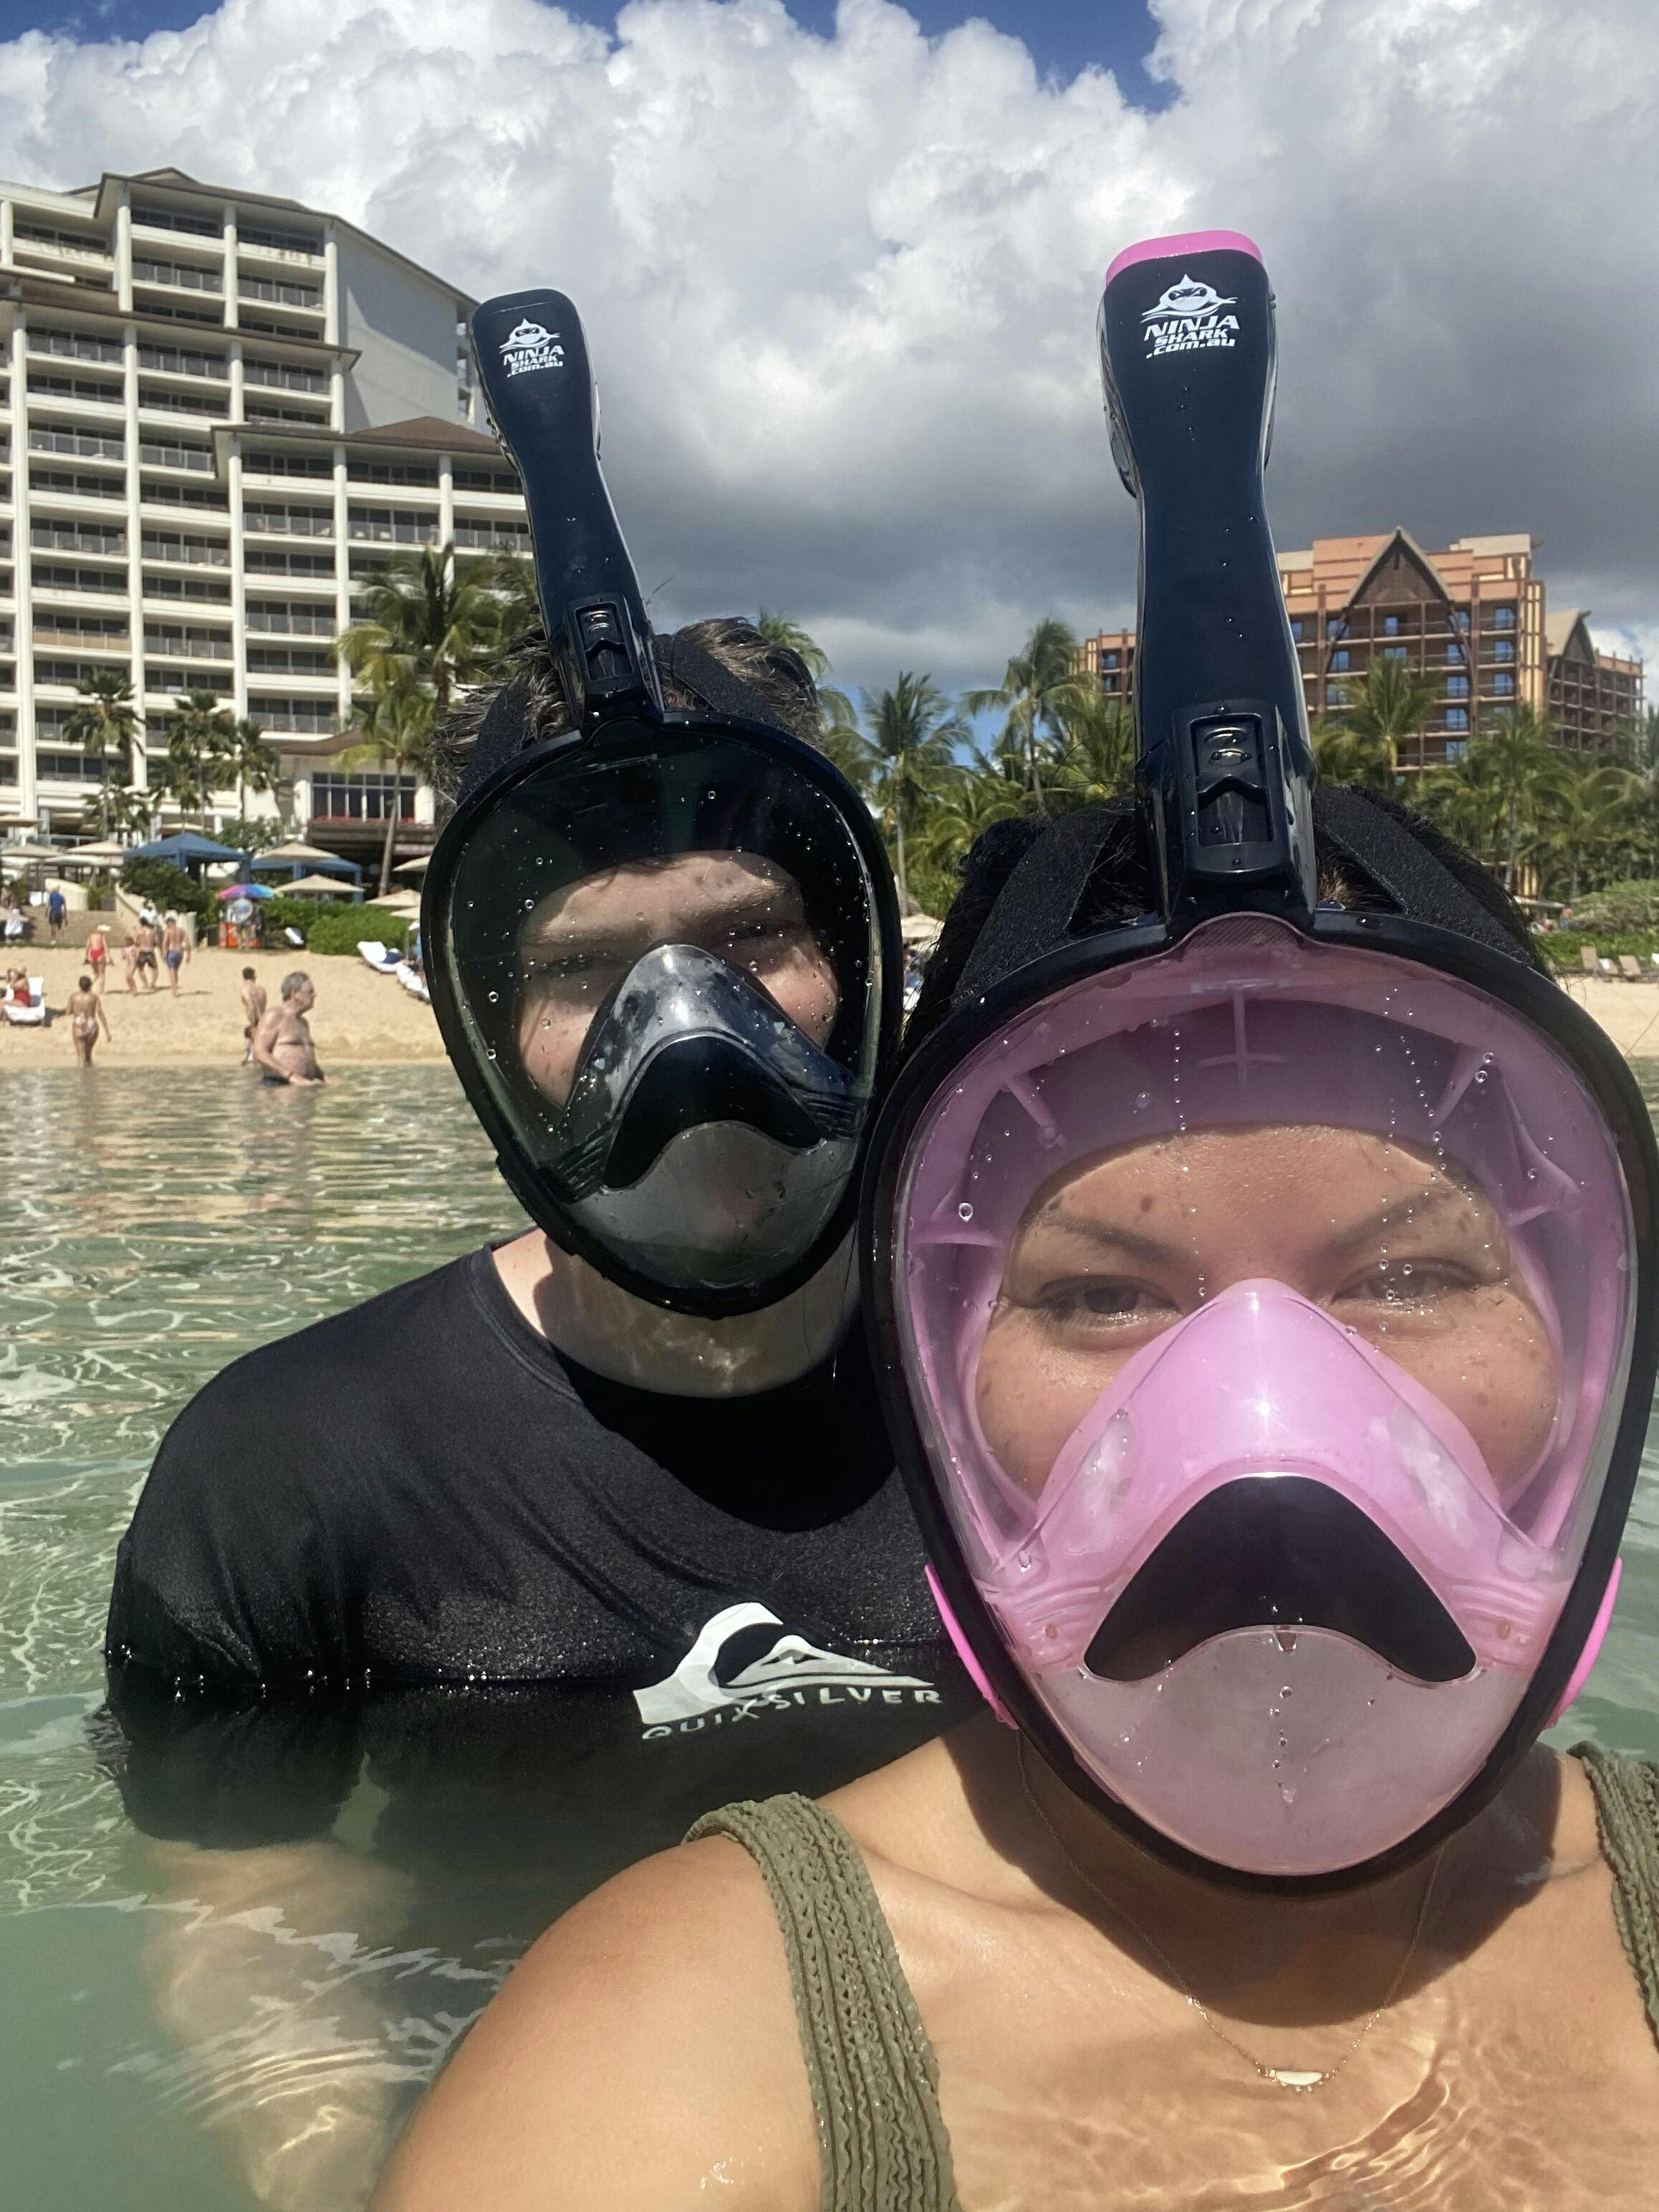 Review: Ninja Shark Snorkel – Let Me Be Free